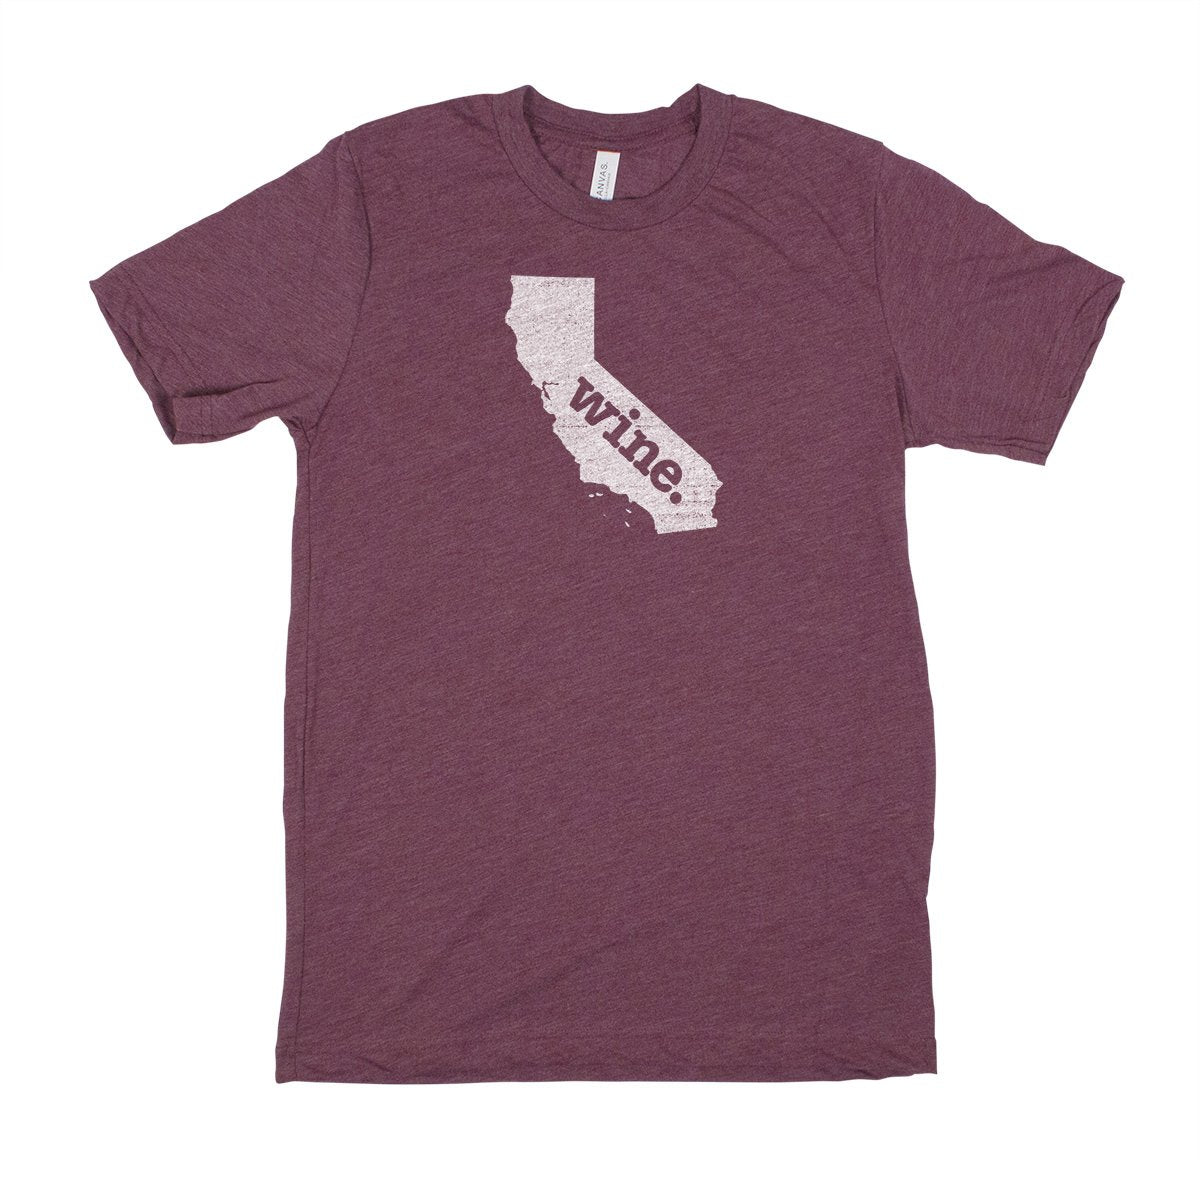 run. Men's Unisex T-Shirt - Maryland